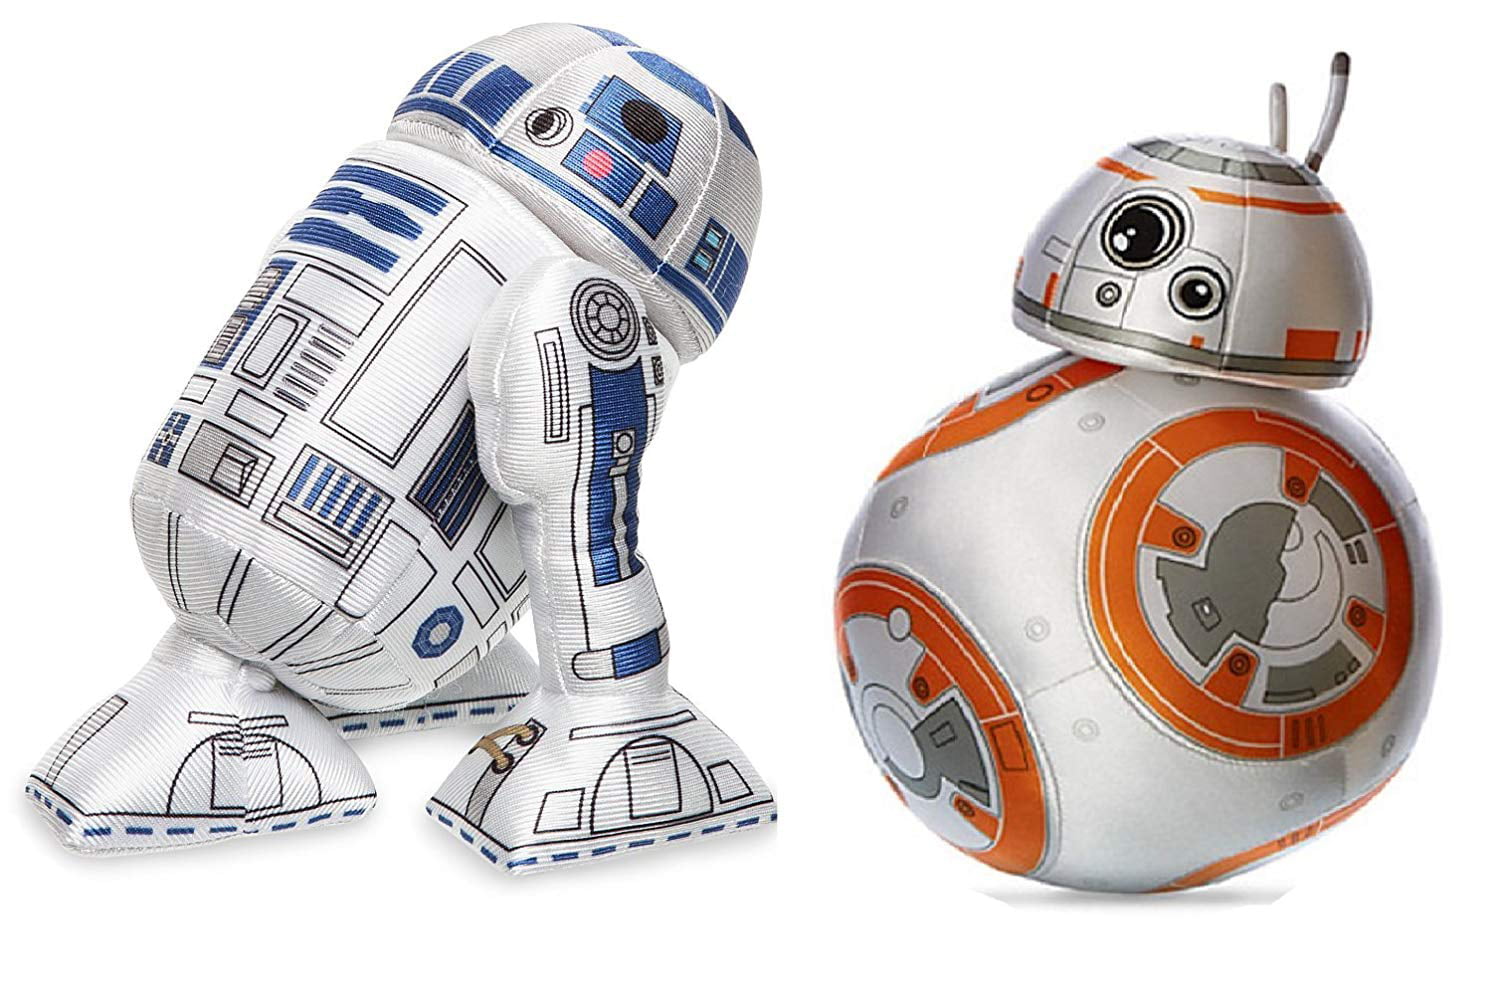 Disney Japan Furuta Choco Egg Star Wars 2 Robot Droid R2-D2 Mini Figure Toy Gift 